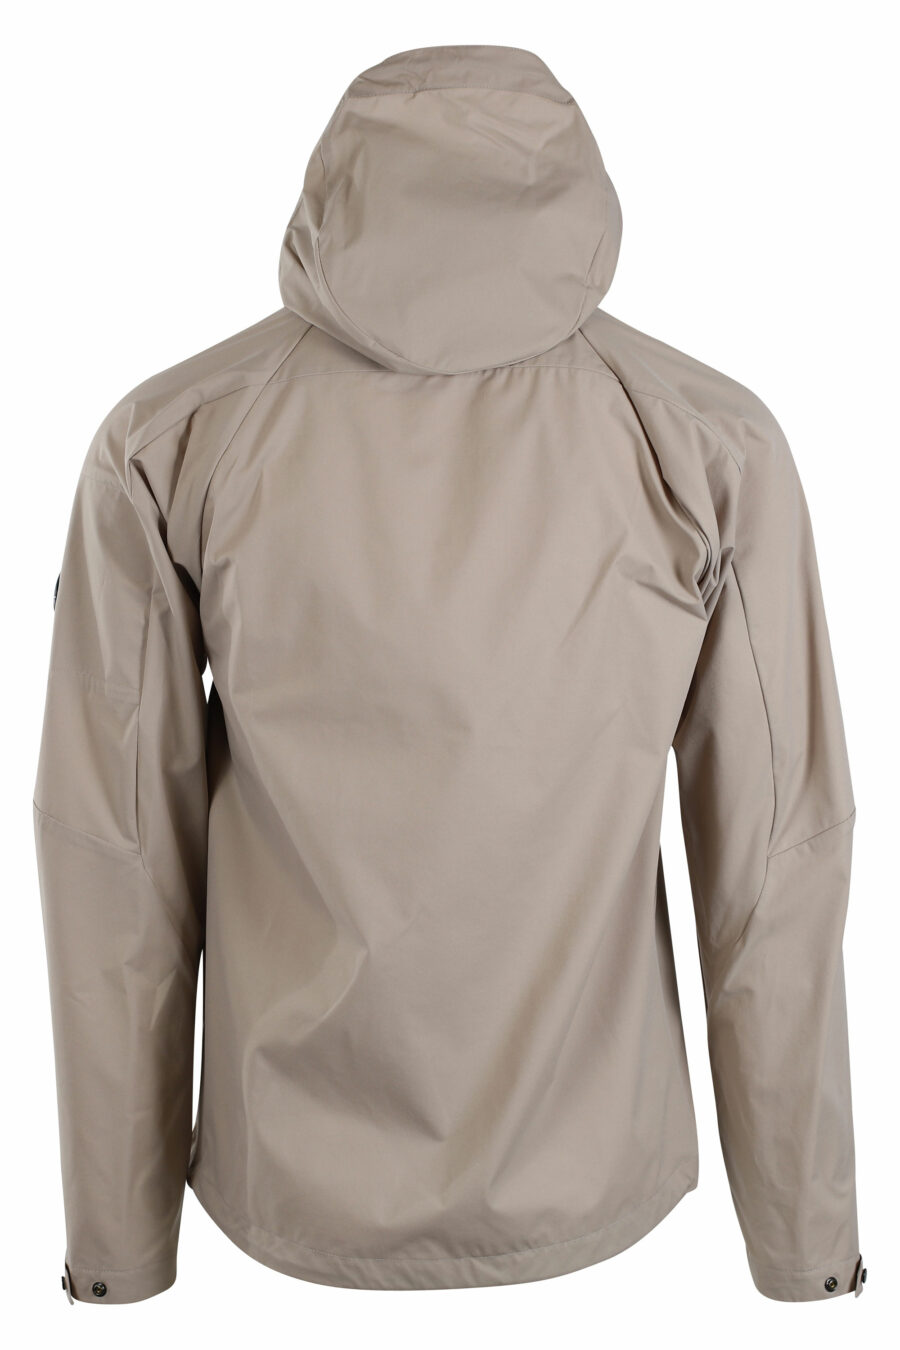 Beige "pro-tek" jacket with hood and circular mini-logo on the side - IMG 2663